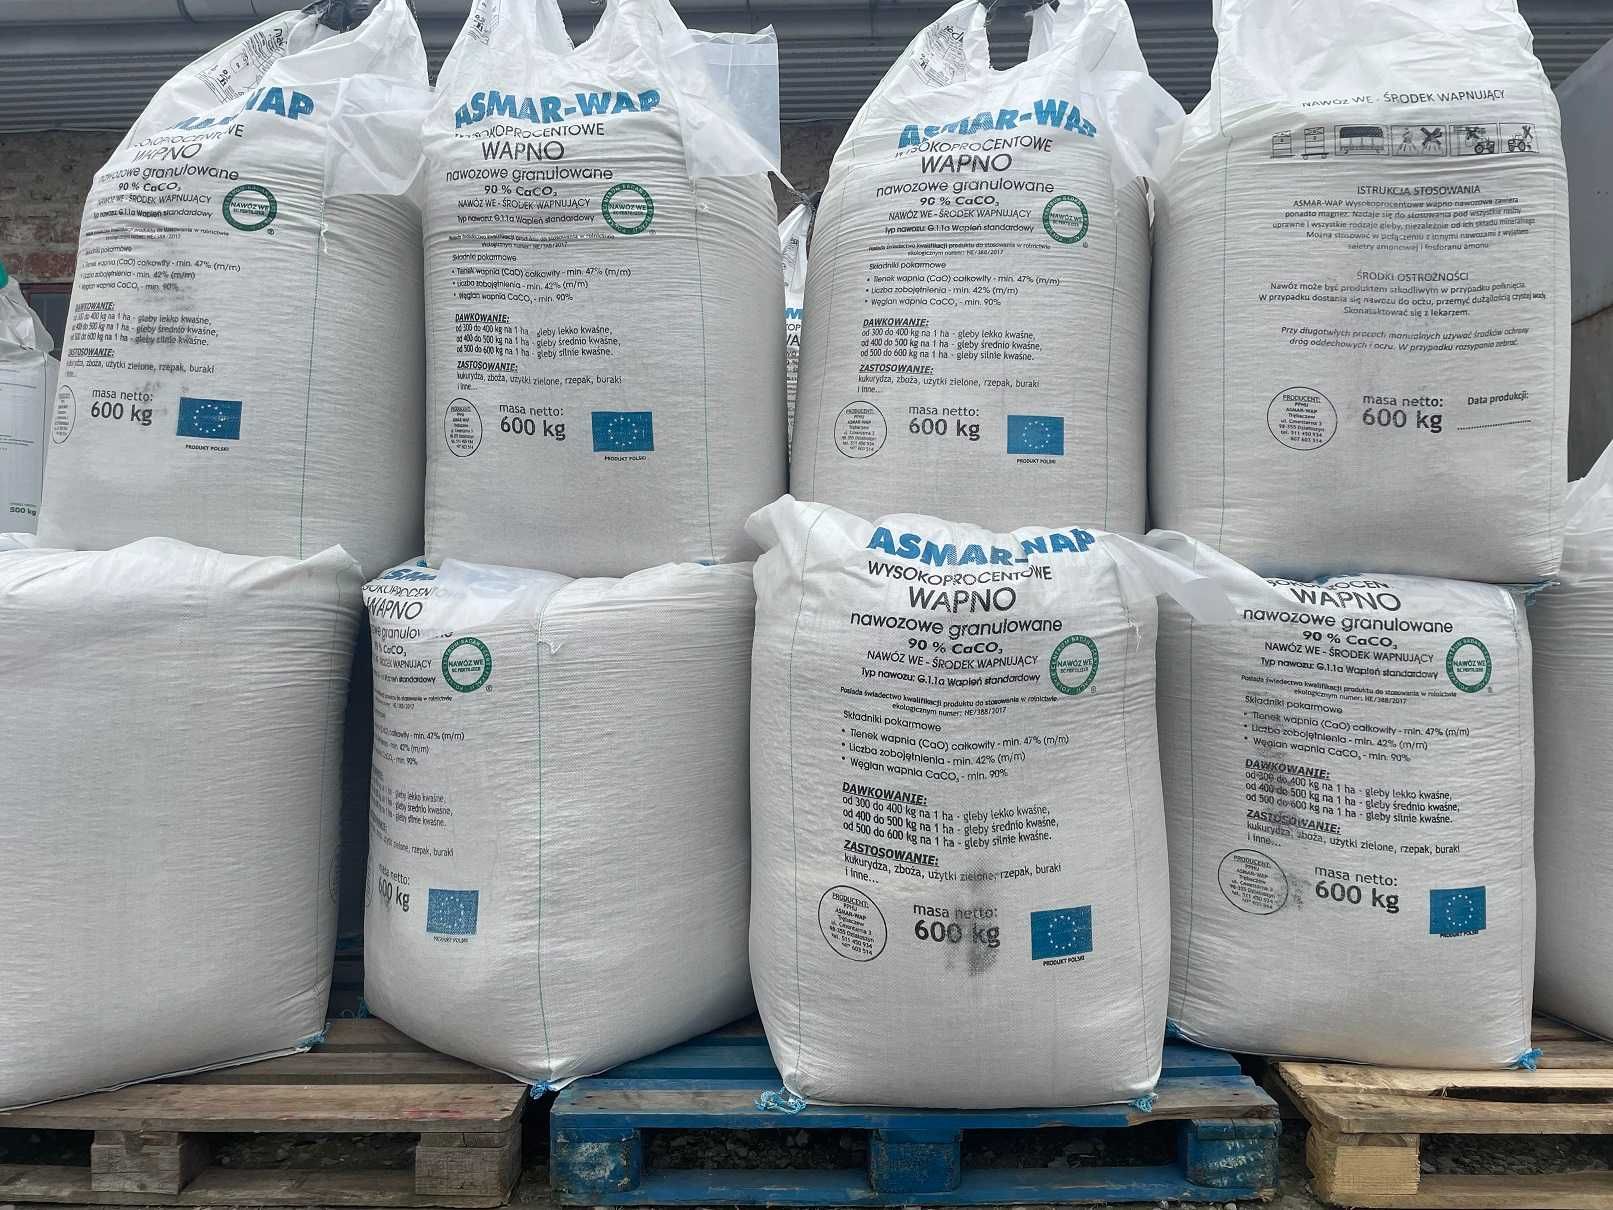 Wapno nawozowe granulowane ASMAR big-bag a'600 kg - Transport HDS